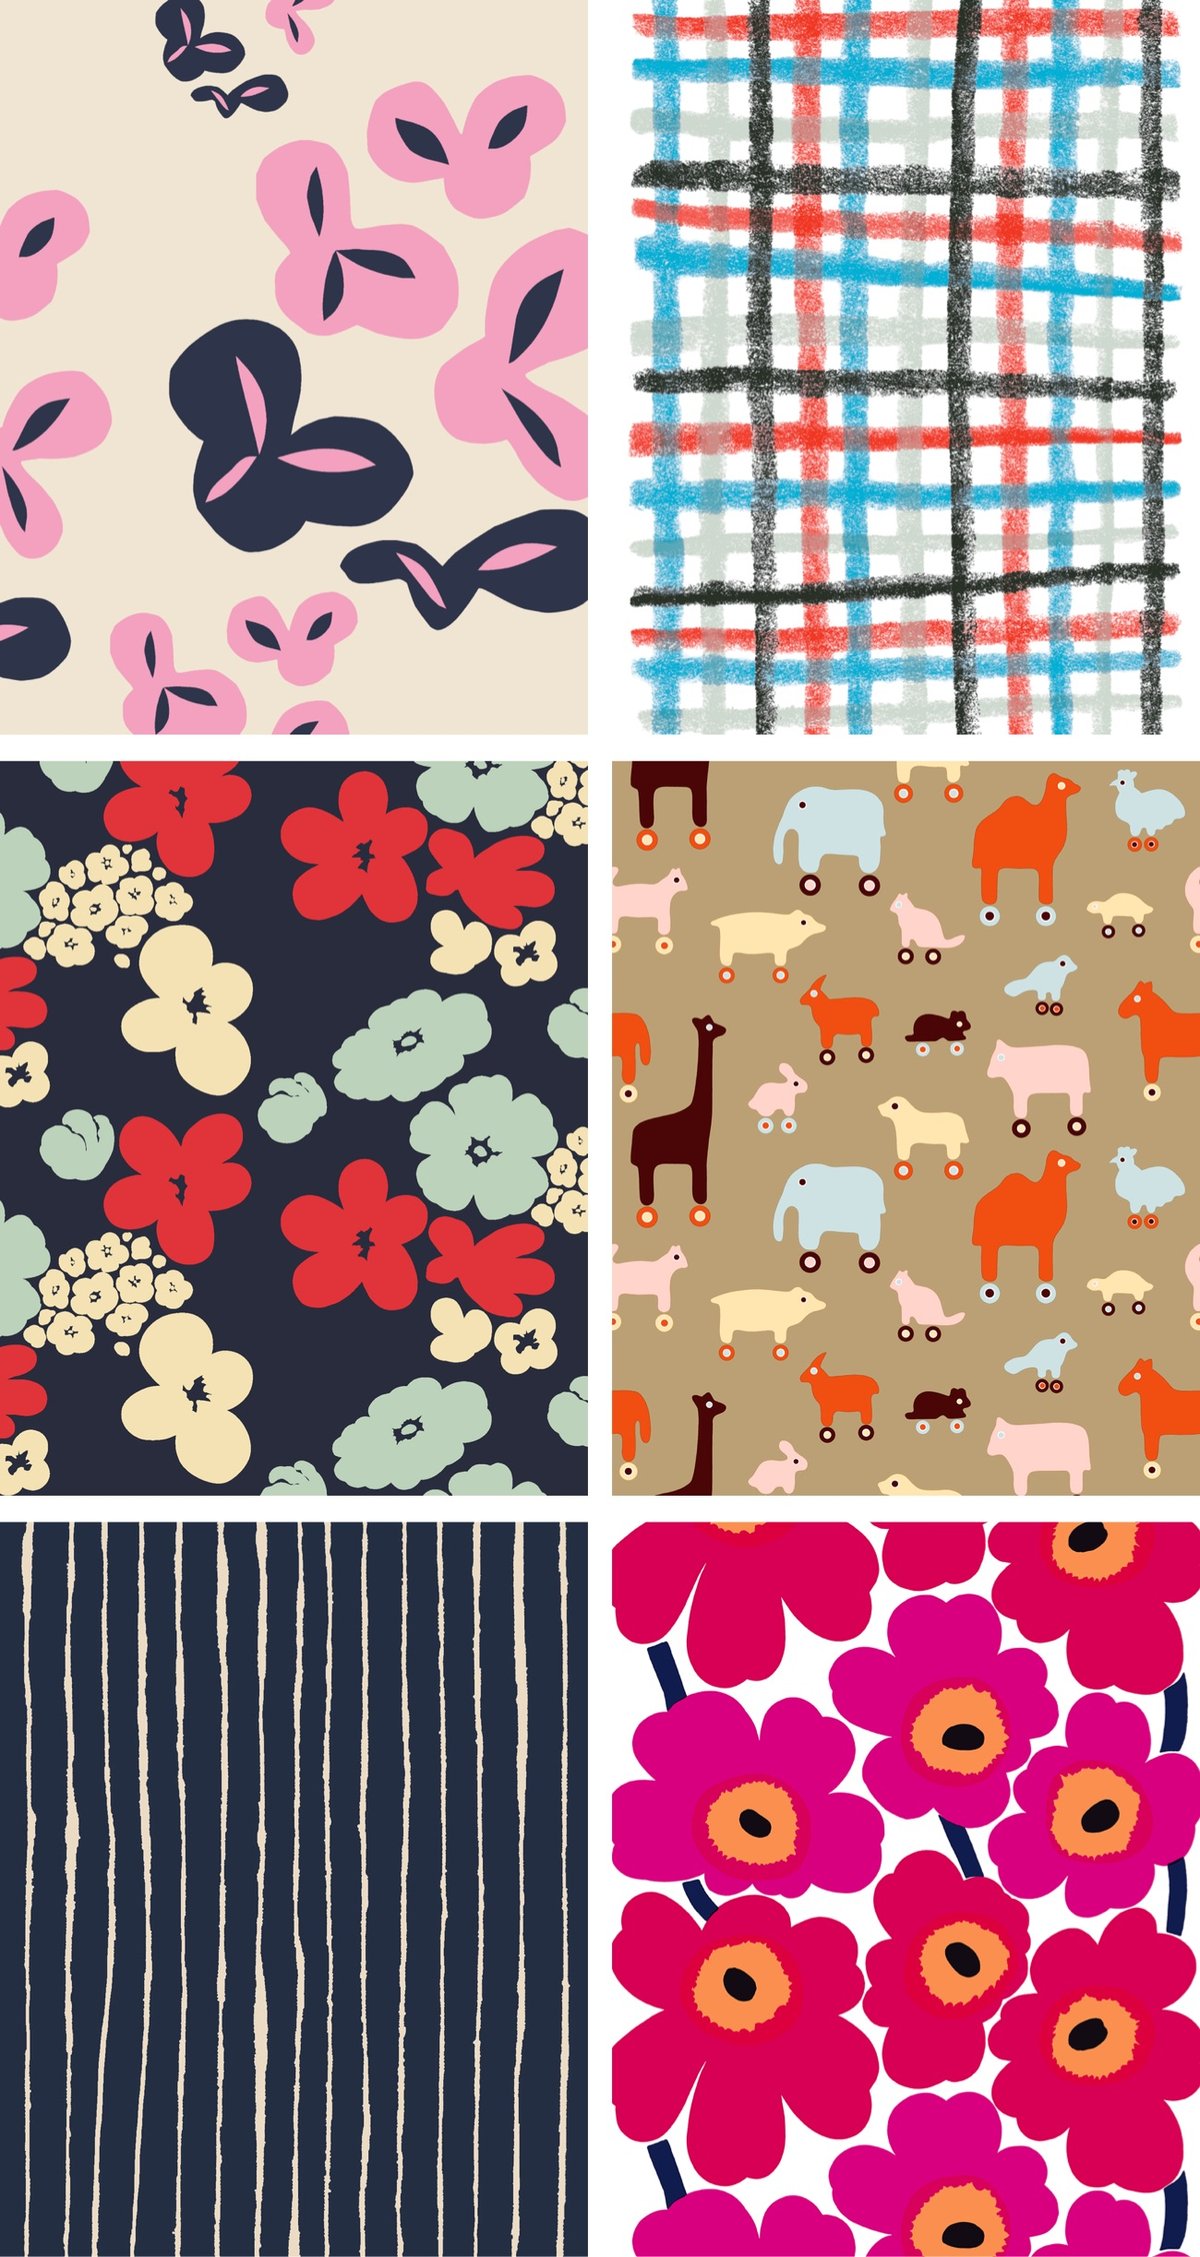 blocks of 6 Marimekko print patterns